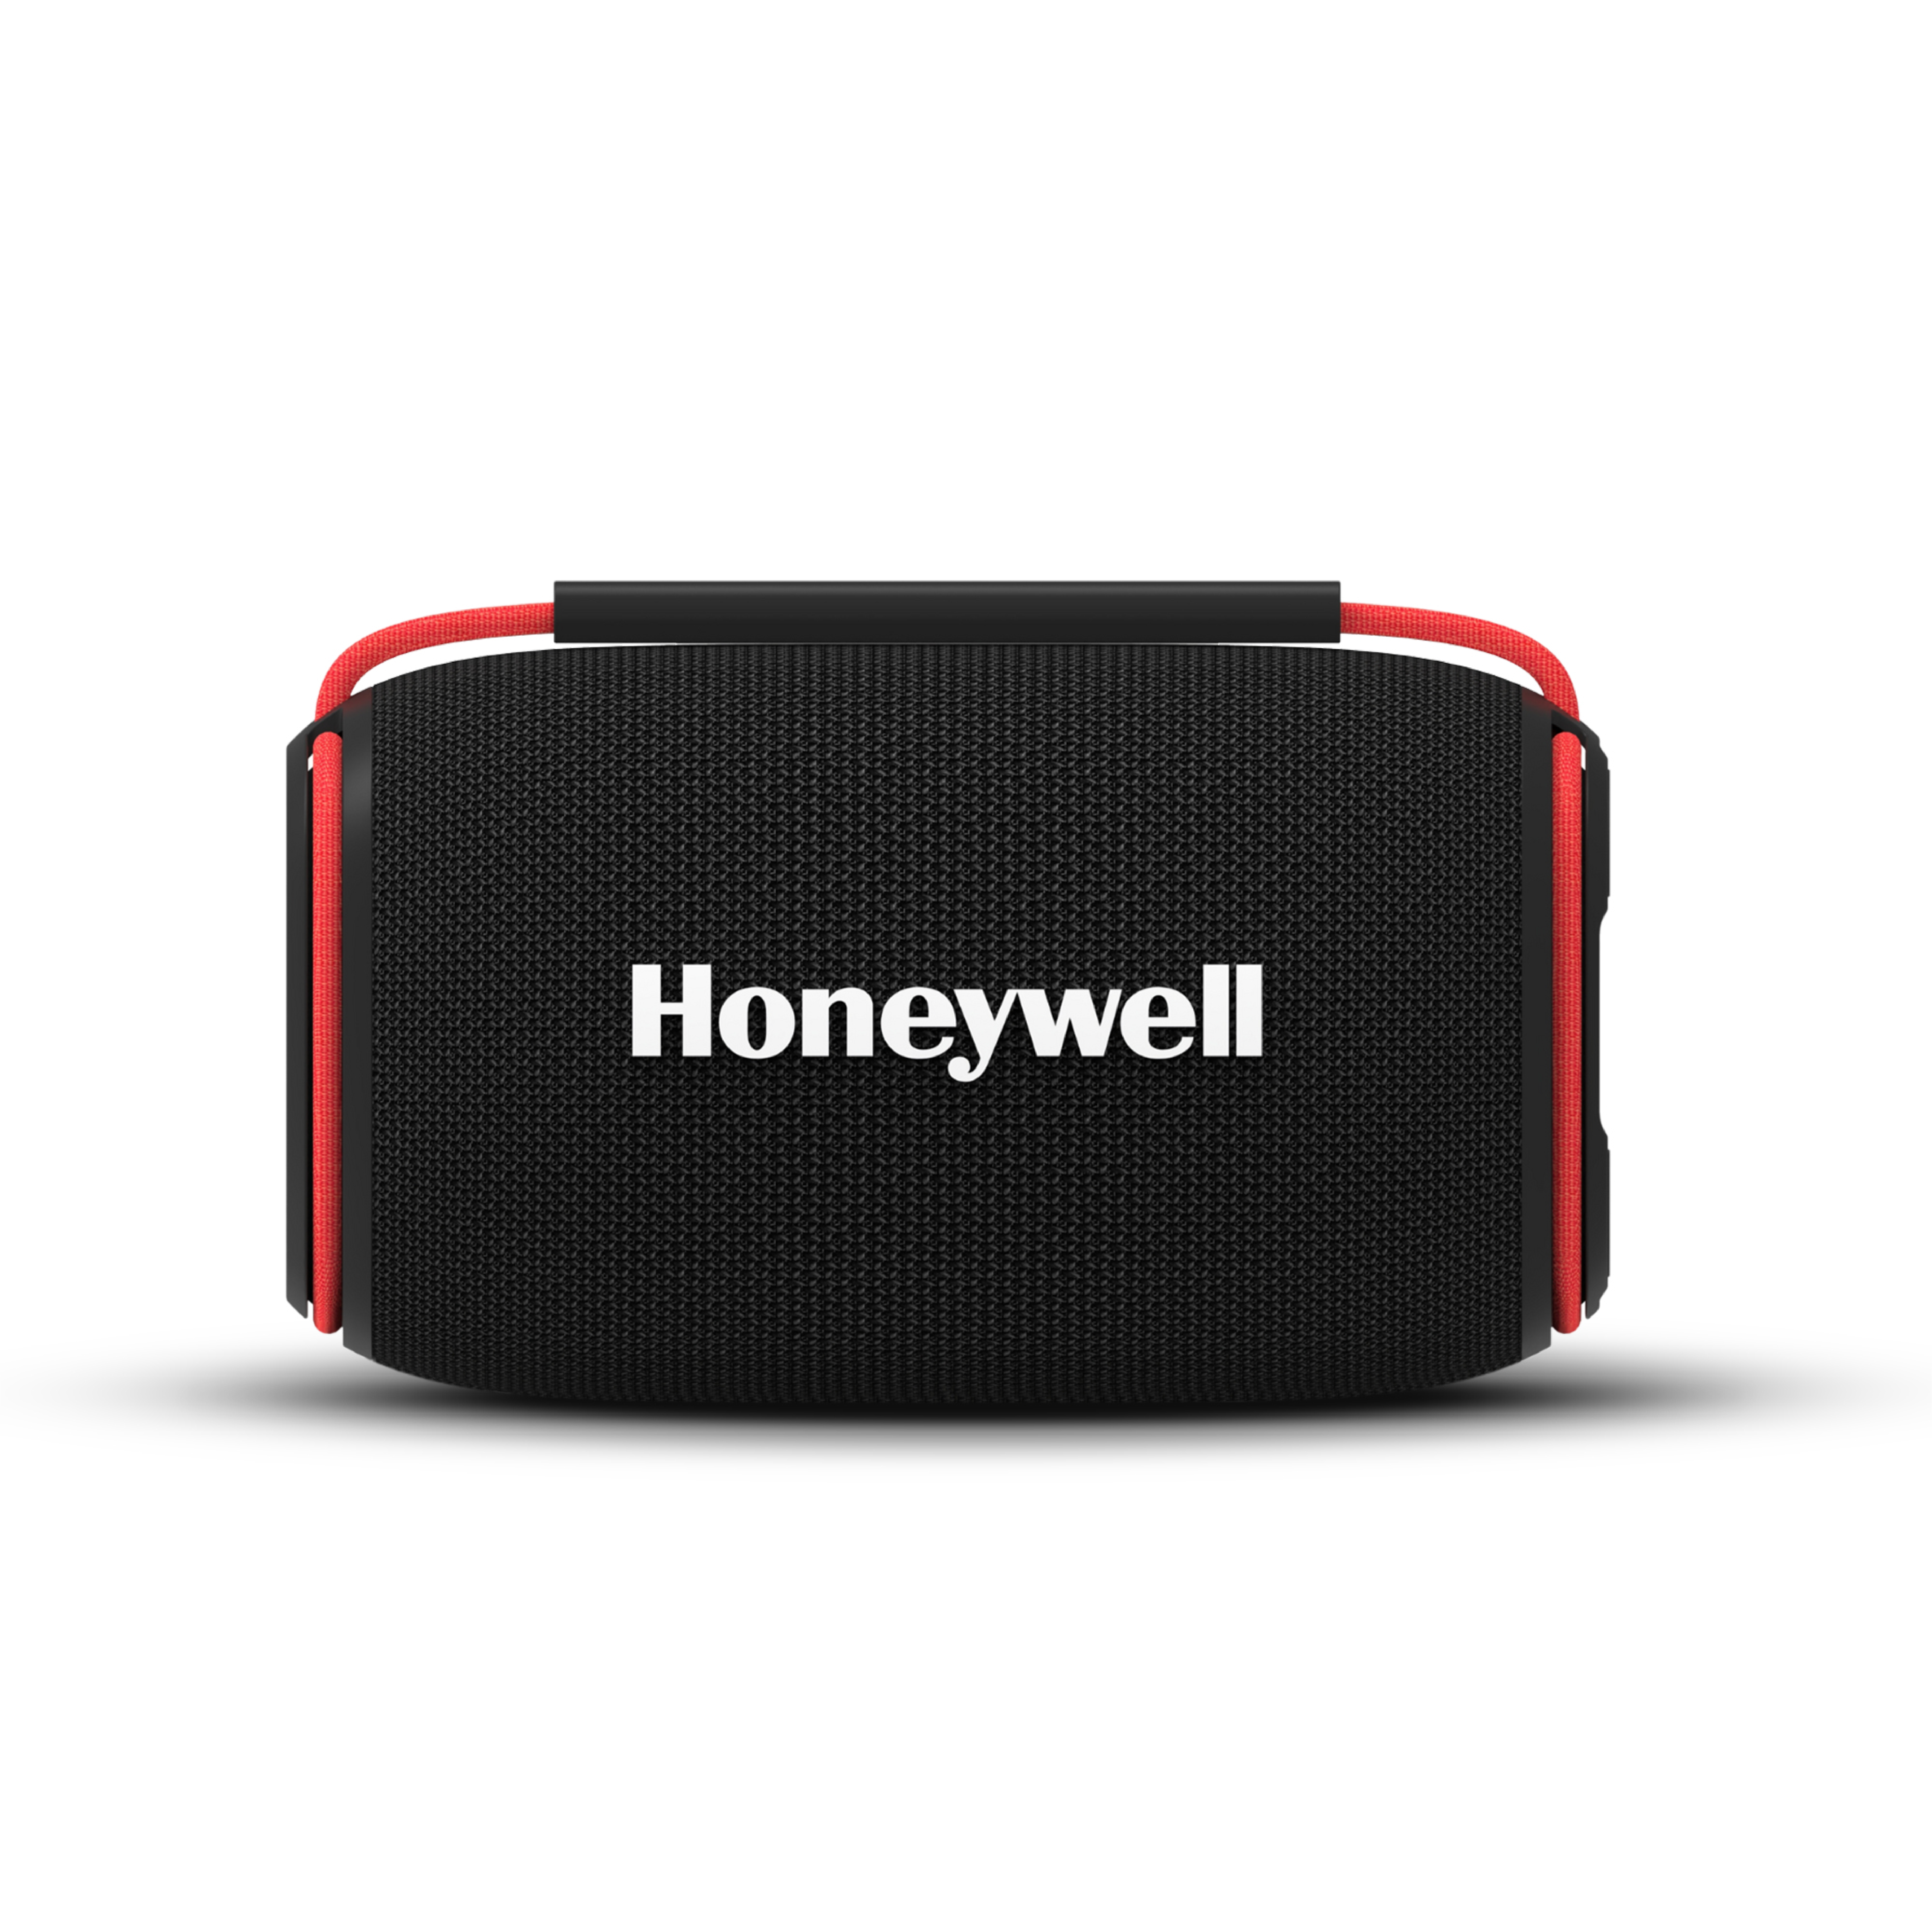 Honeywell Newly Launched Suono P400,Wireless Bluetooth Speaker,15W 